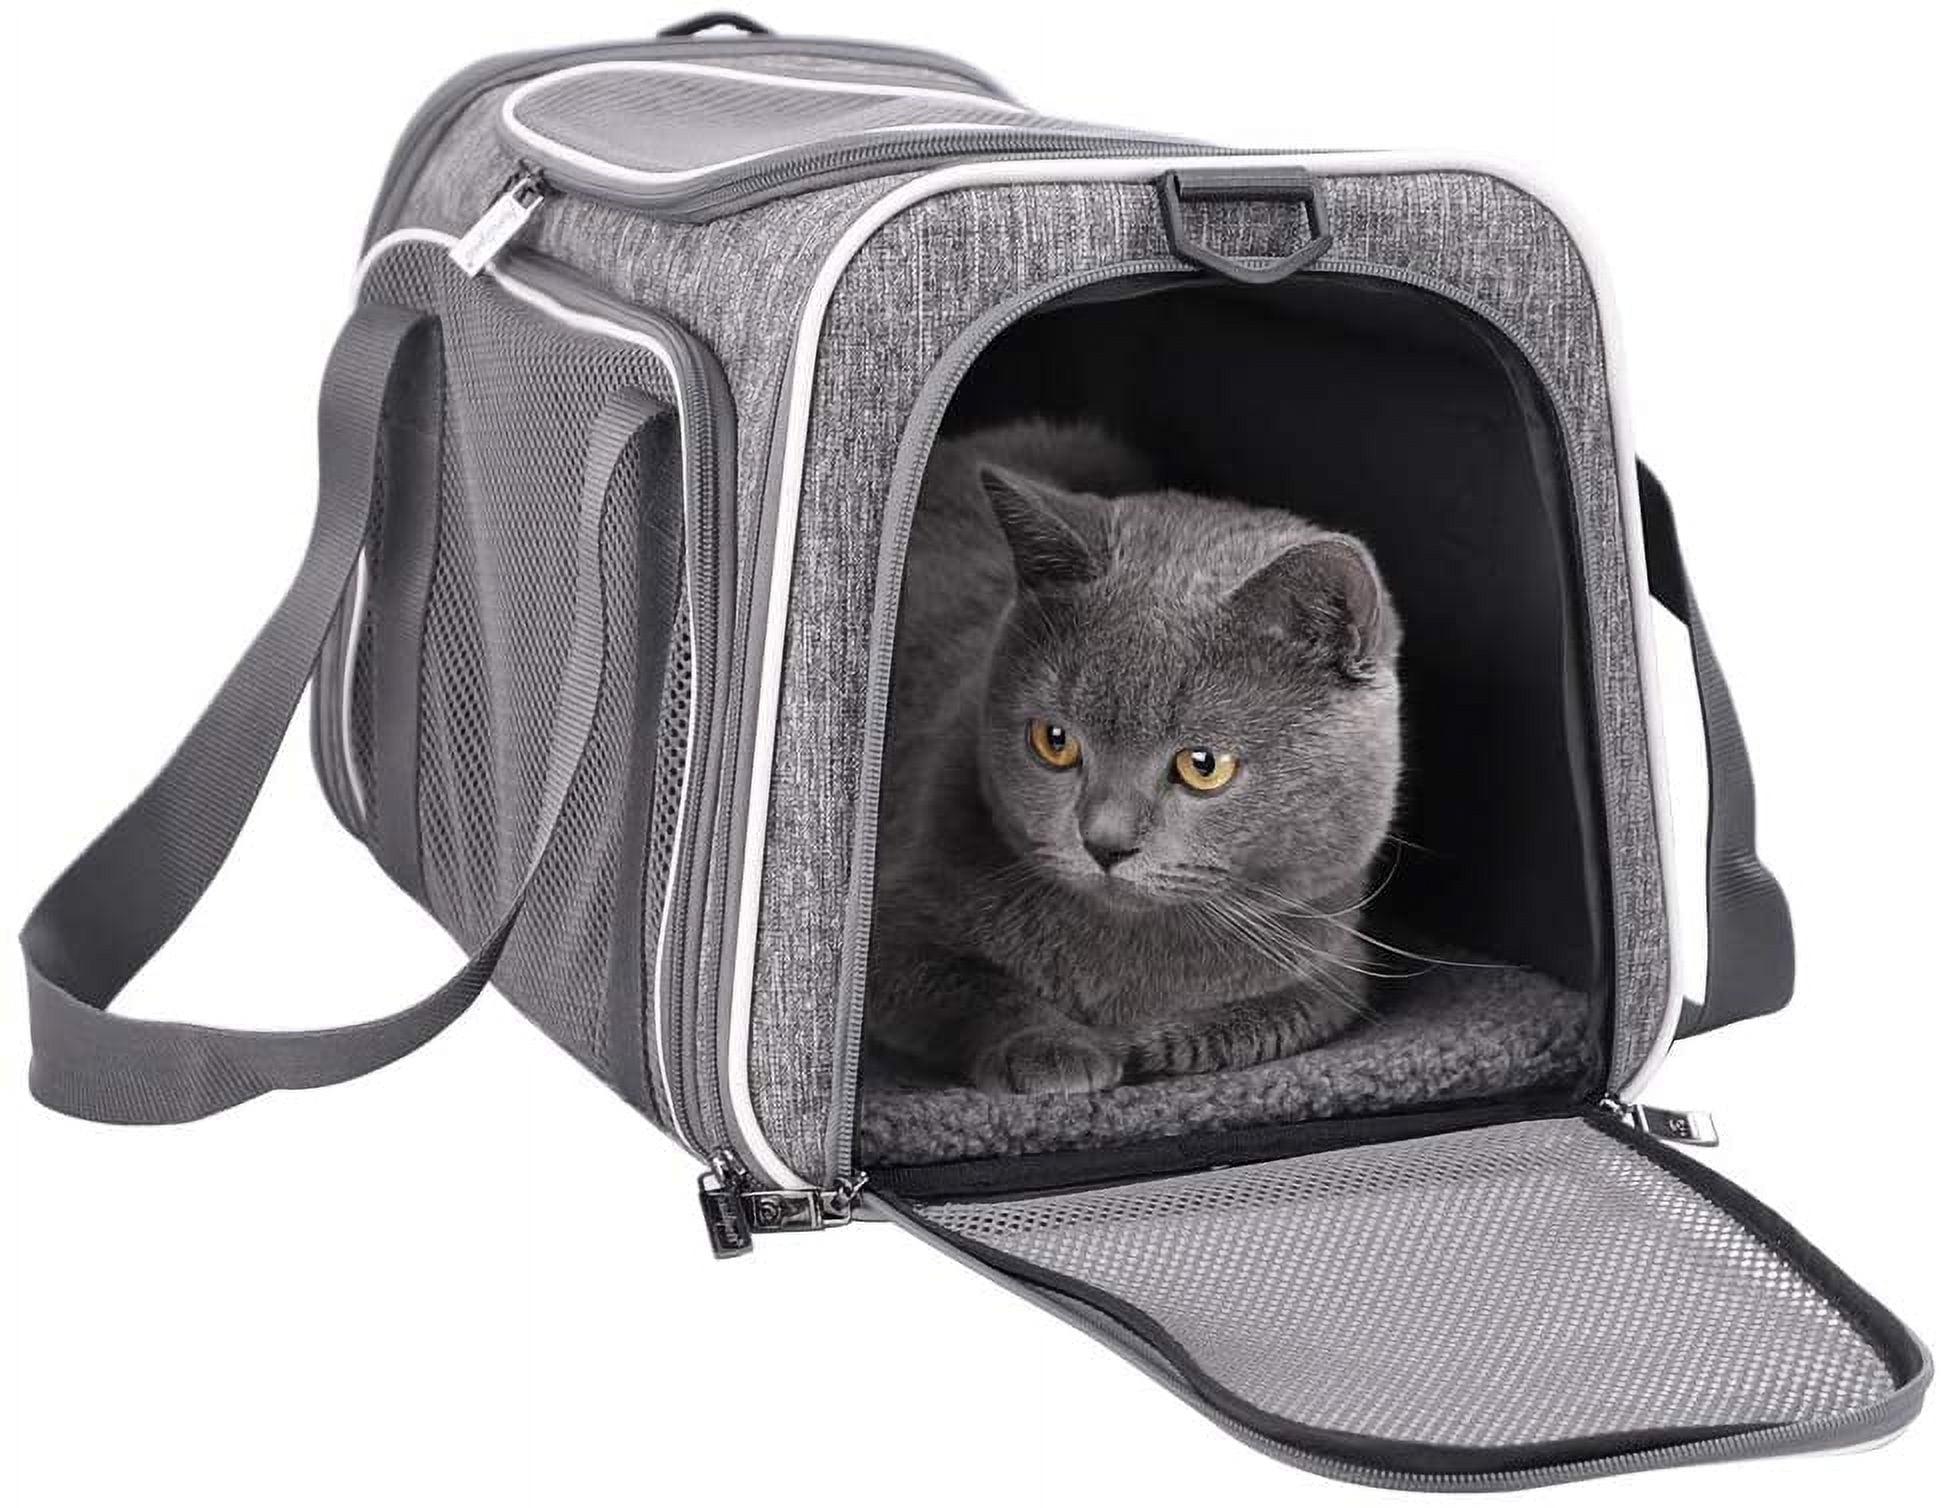 HITSLAM Pet Carrier Cat Carrier Soft Sided Pet Travel Carrier for